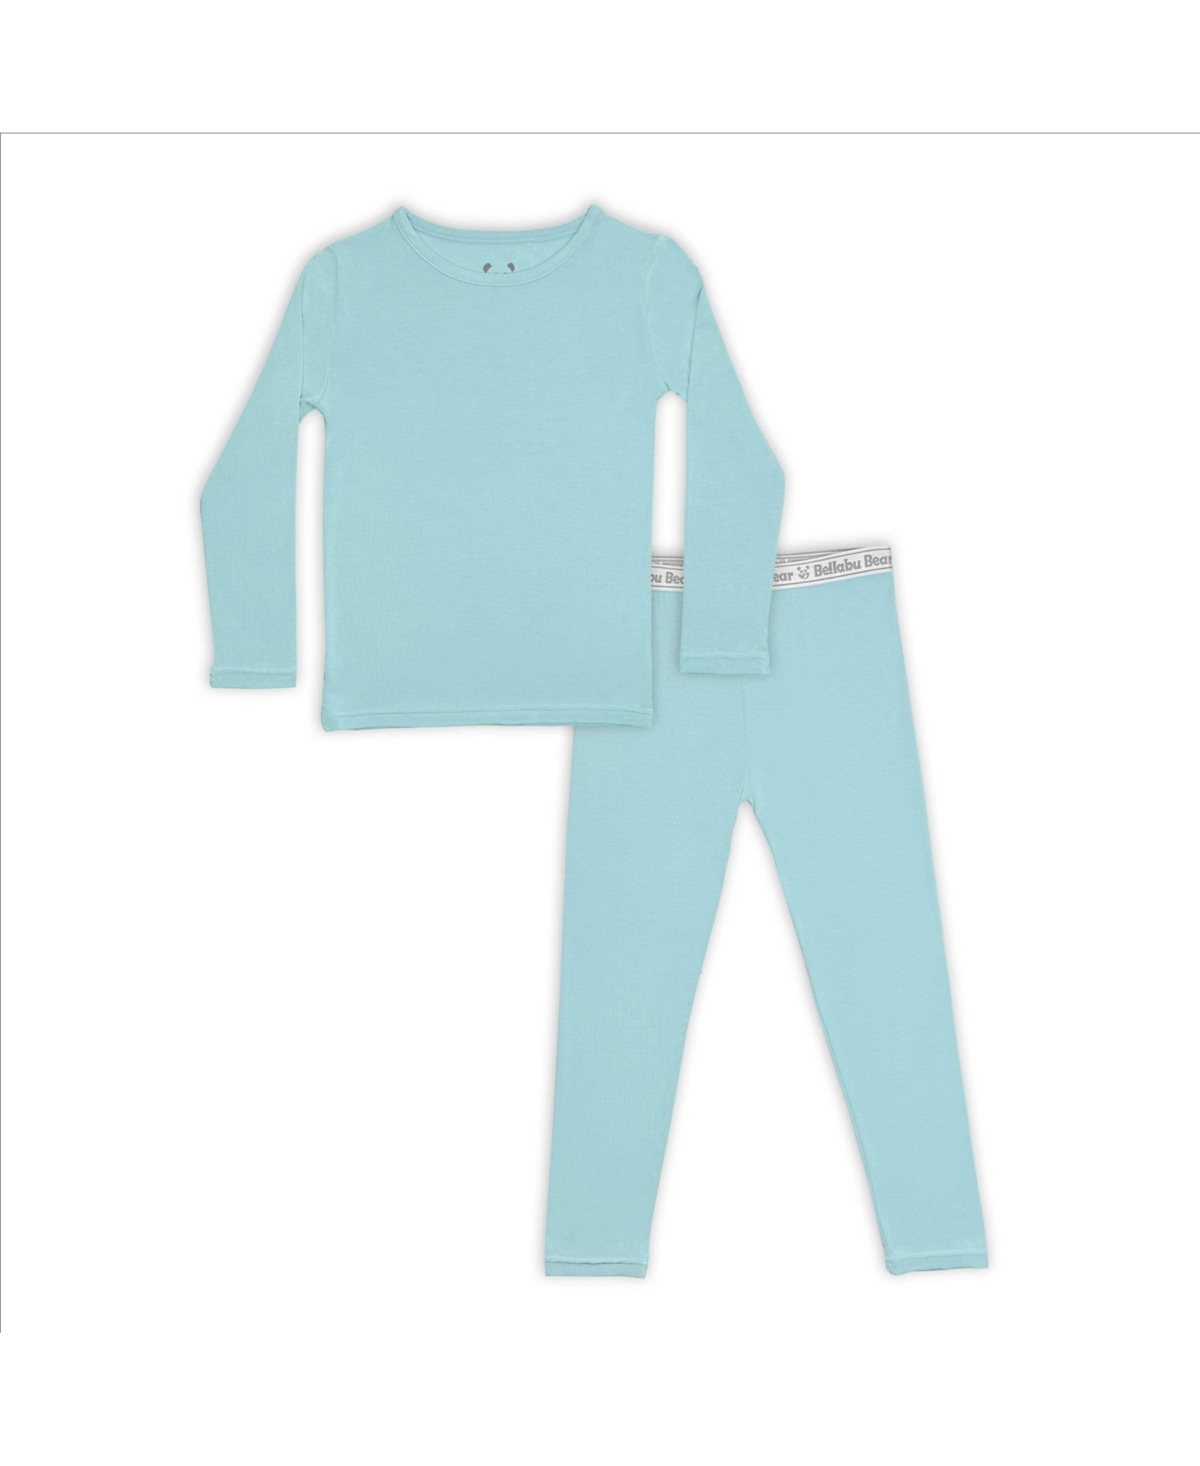 Bellabu Bear Unisex Kidsâ Adventure Blue Set Of 2 Piece Pajamas